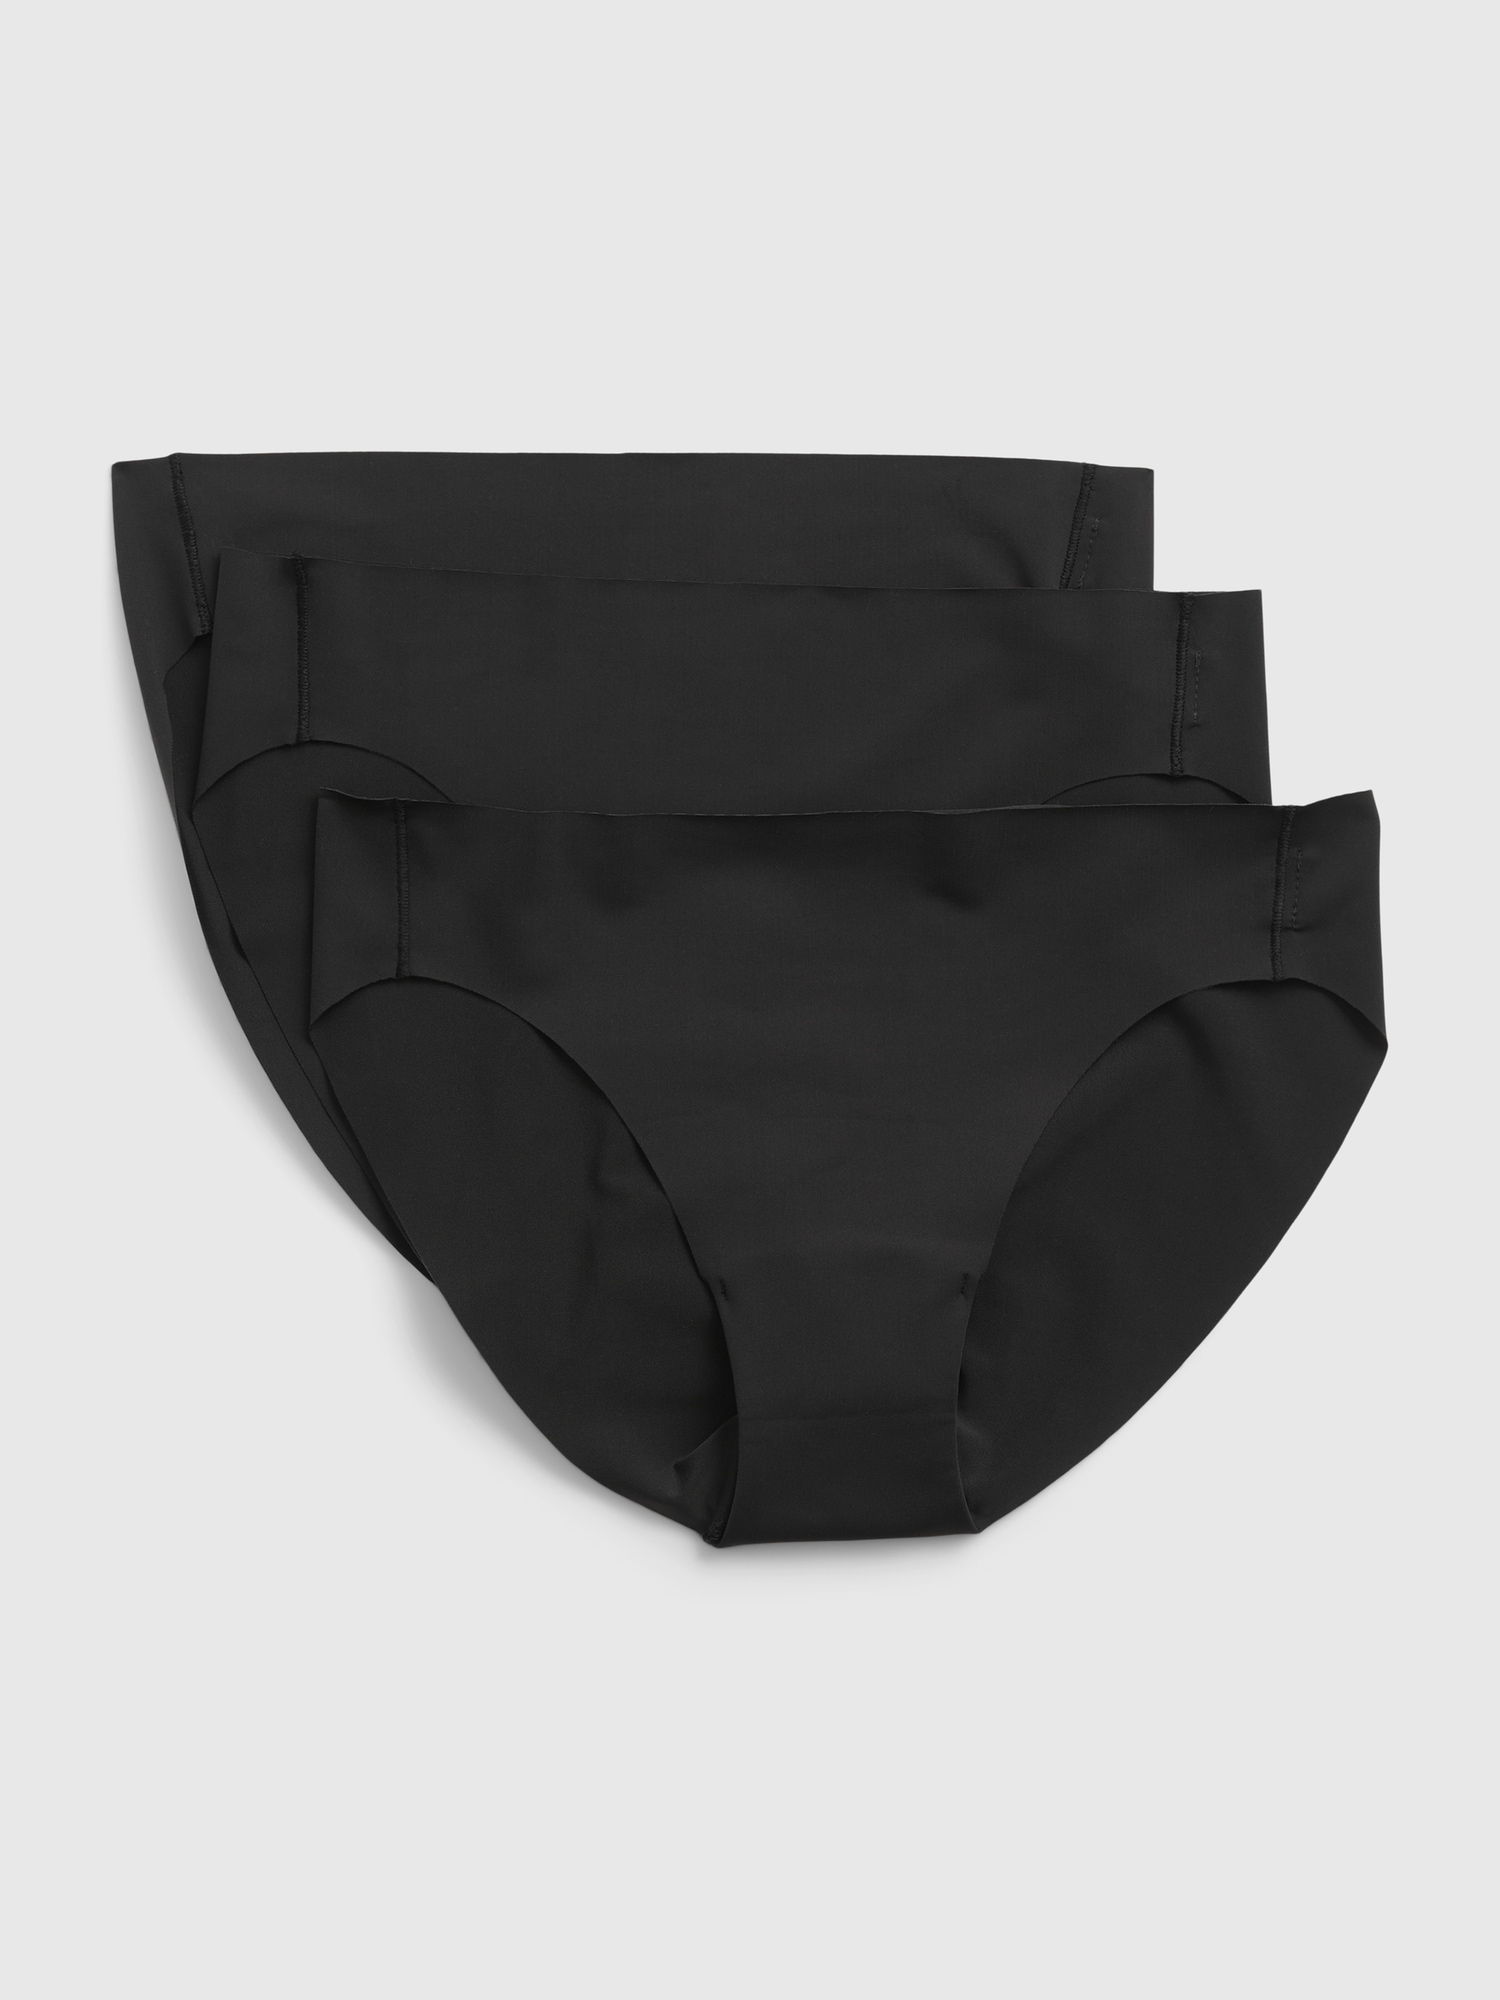 NWT Gap Body Ladies Xl Black velour sexy Underwear Panties RTL